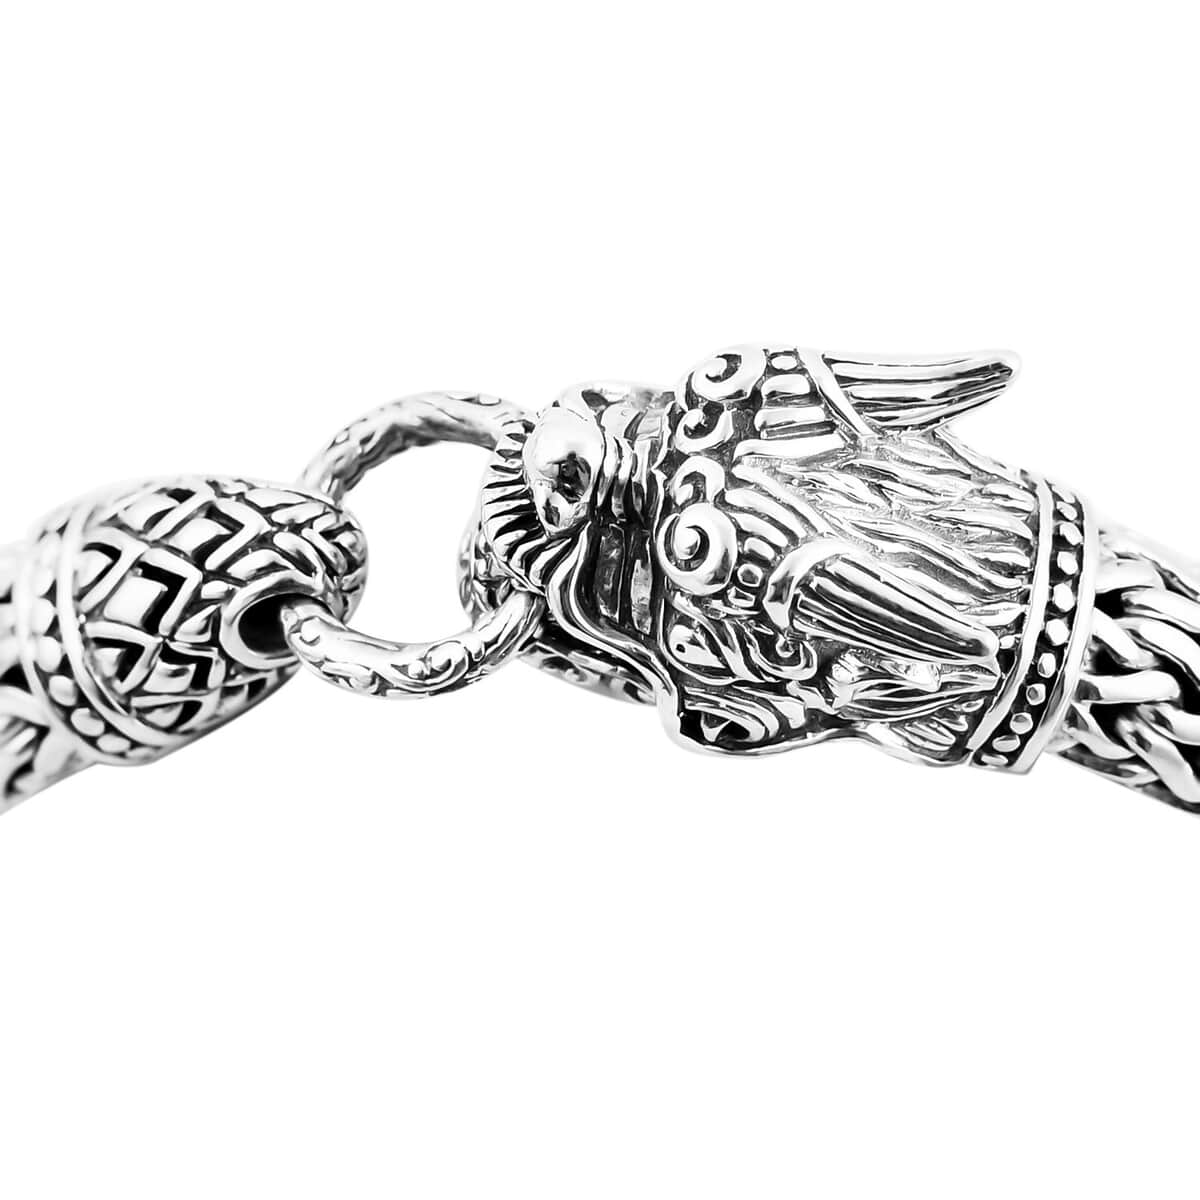 Bali Legacy Sterling Silver Dragon Bracelet (7.25 In) 65.25 Grams image number 3